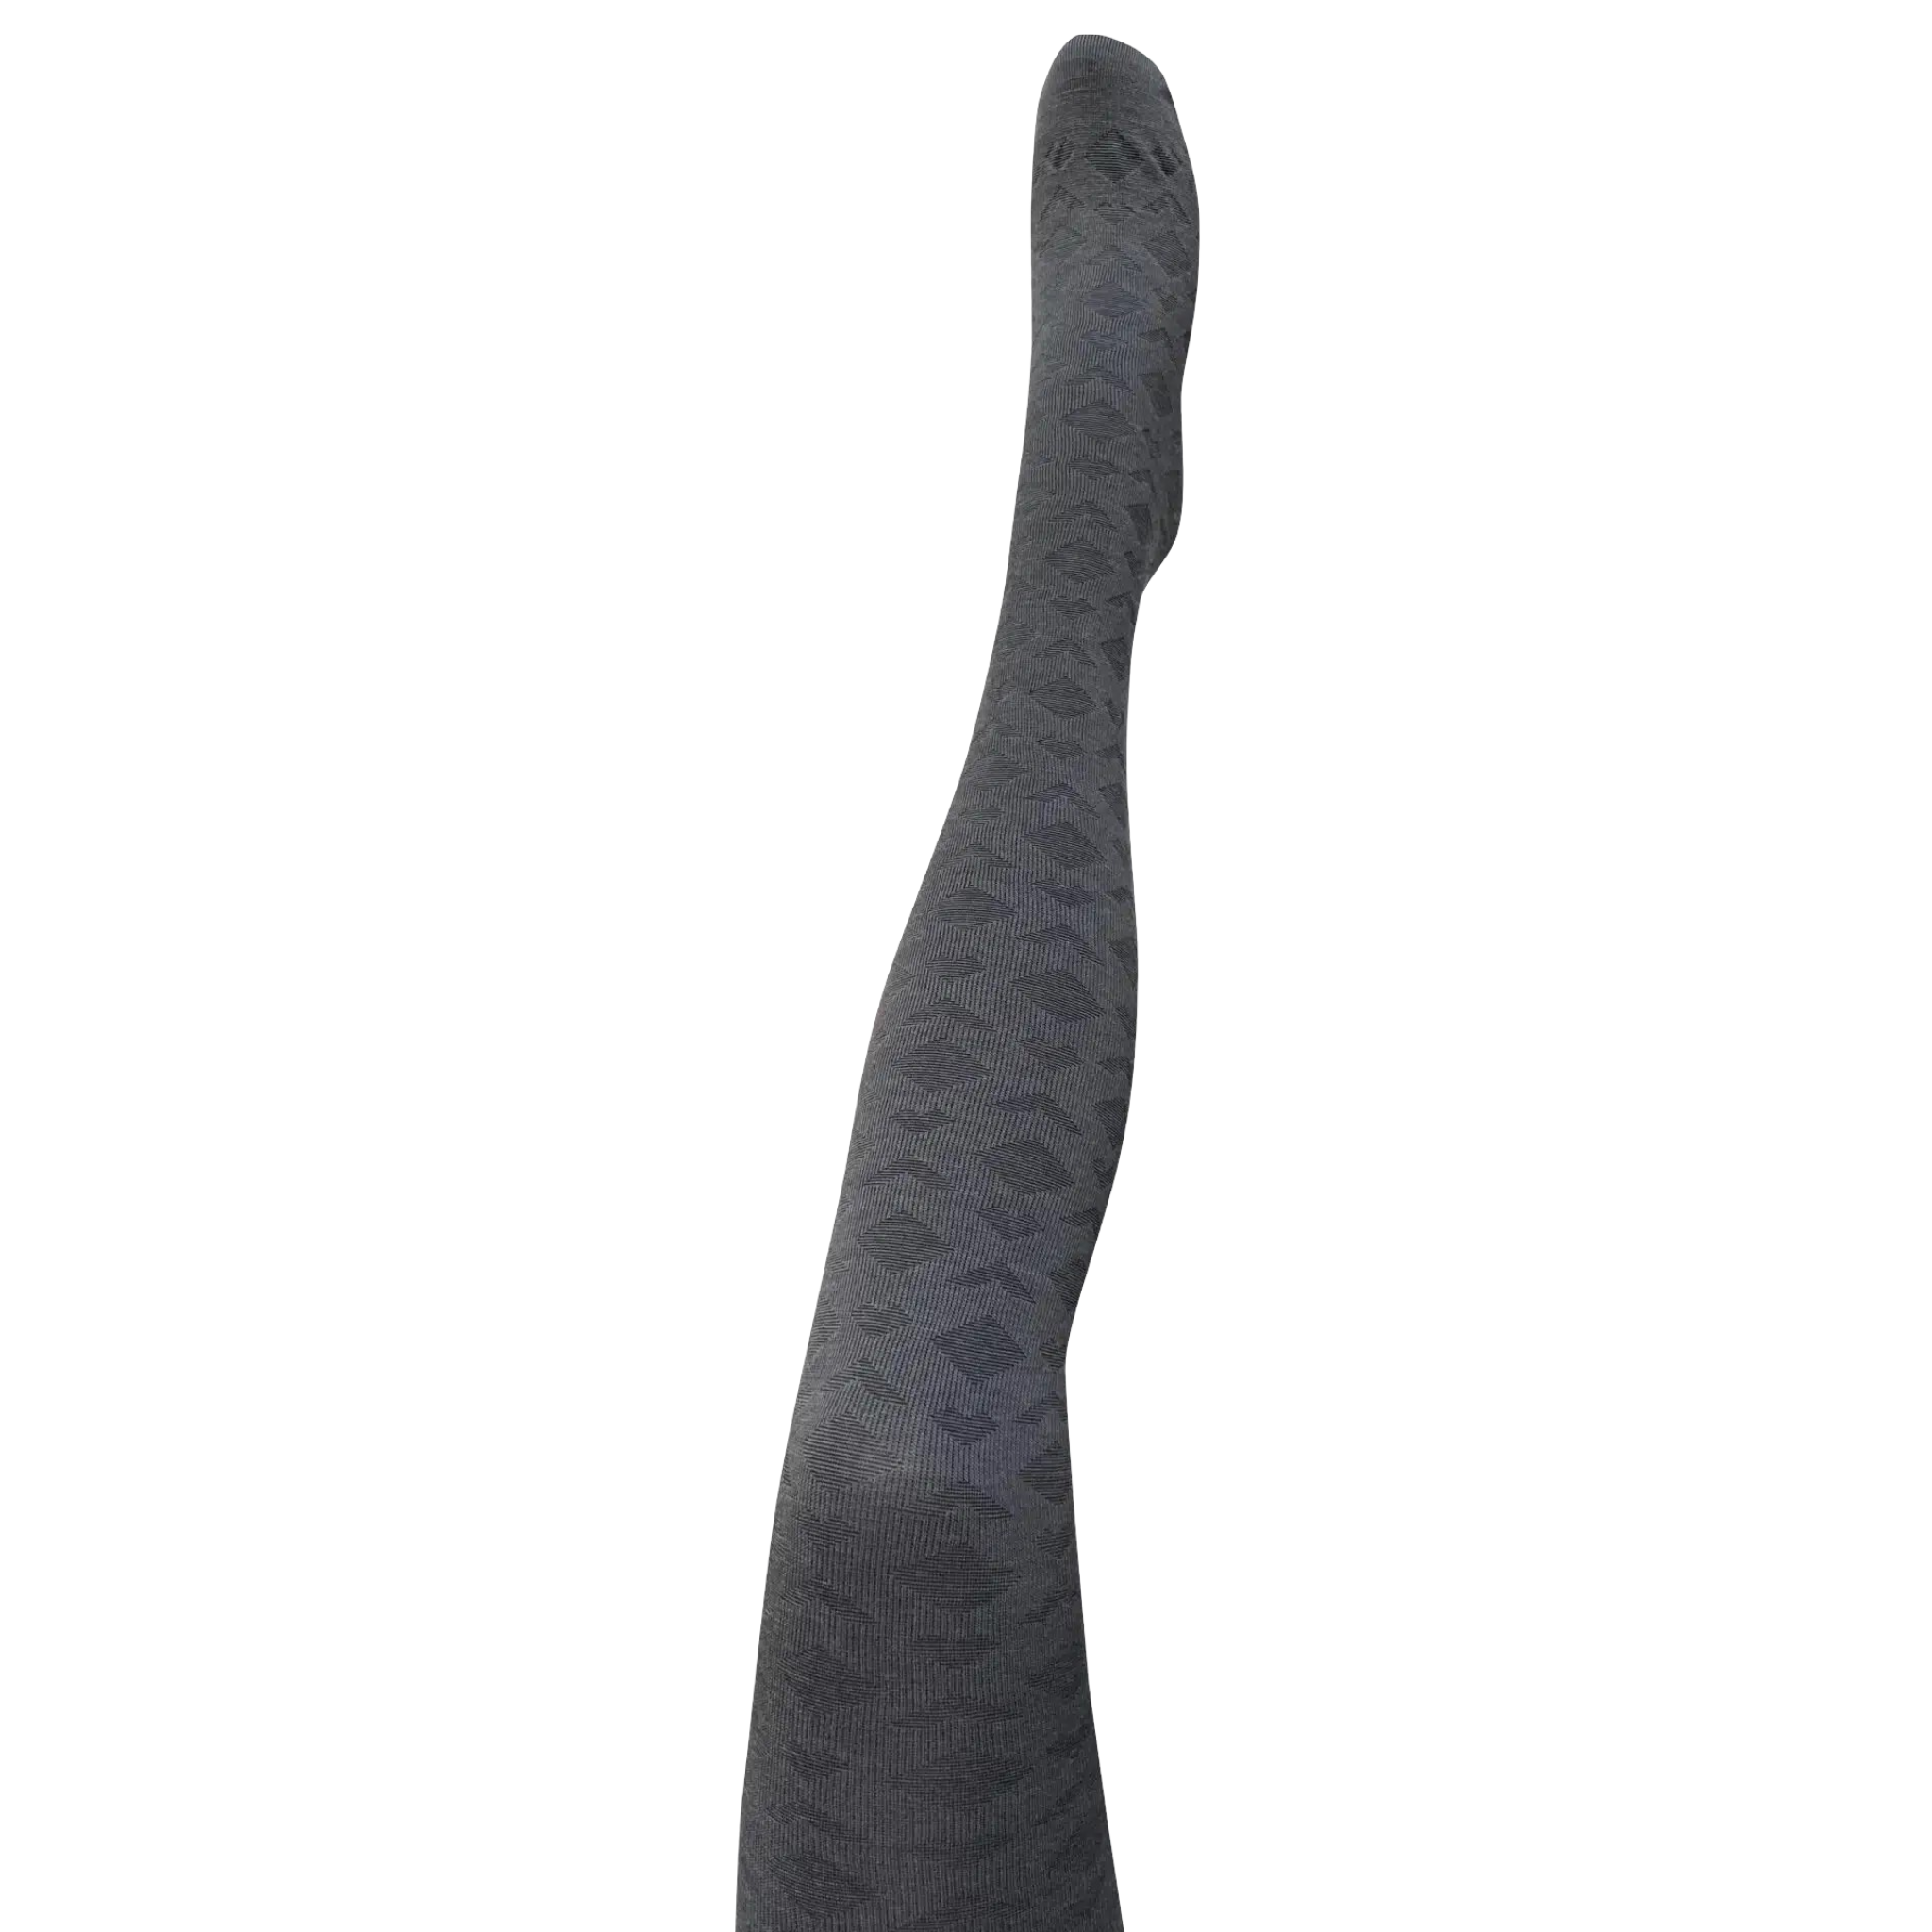 Tightology Deco Merino Wool Tights – Manteau Noir